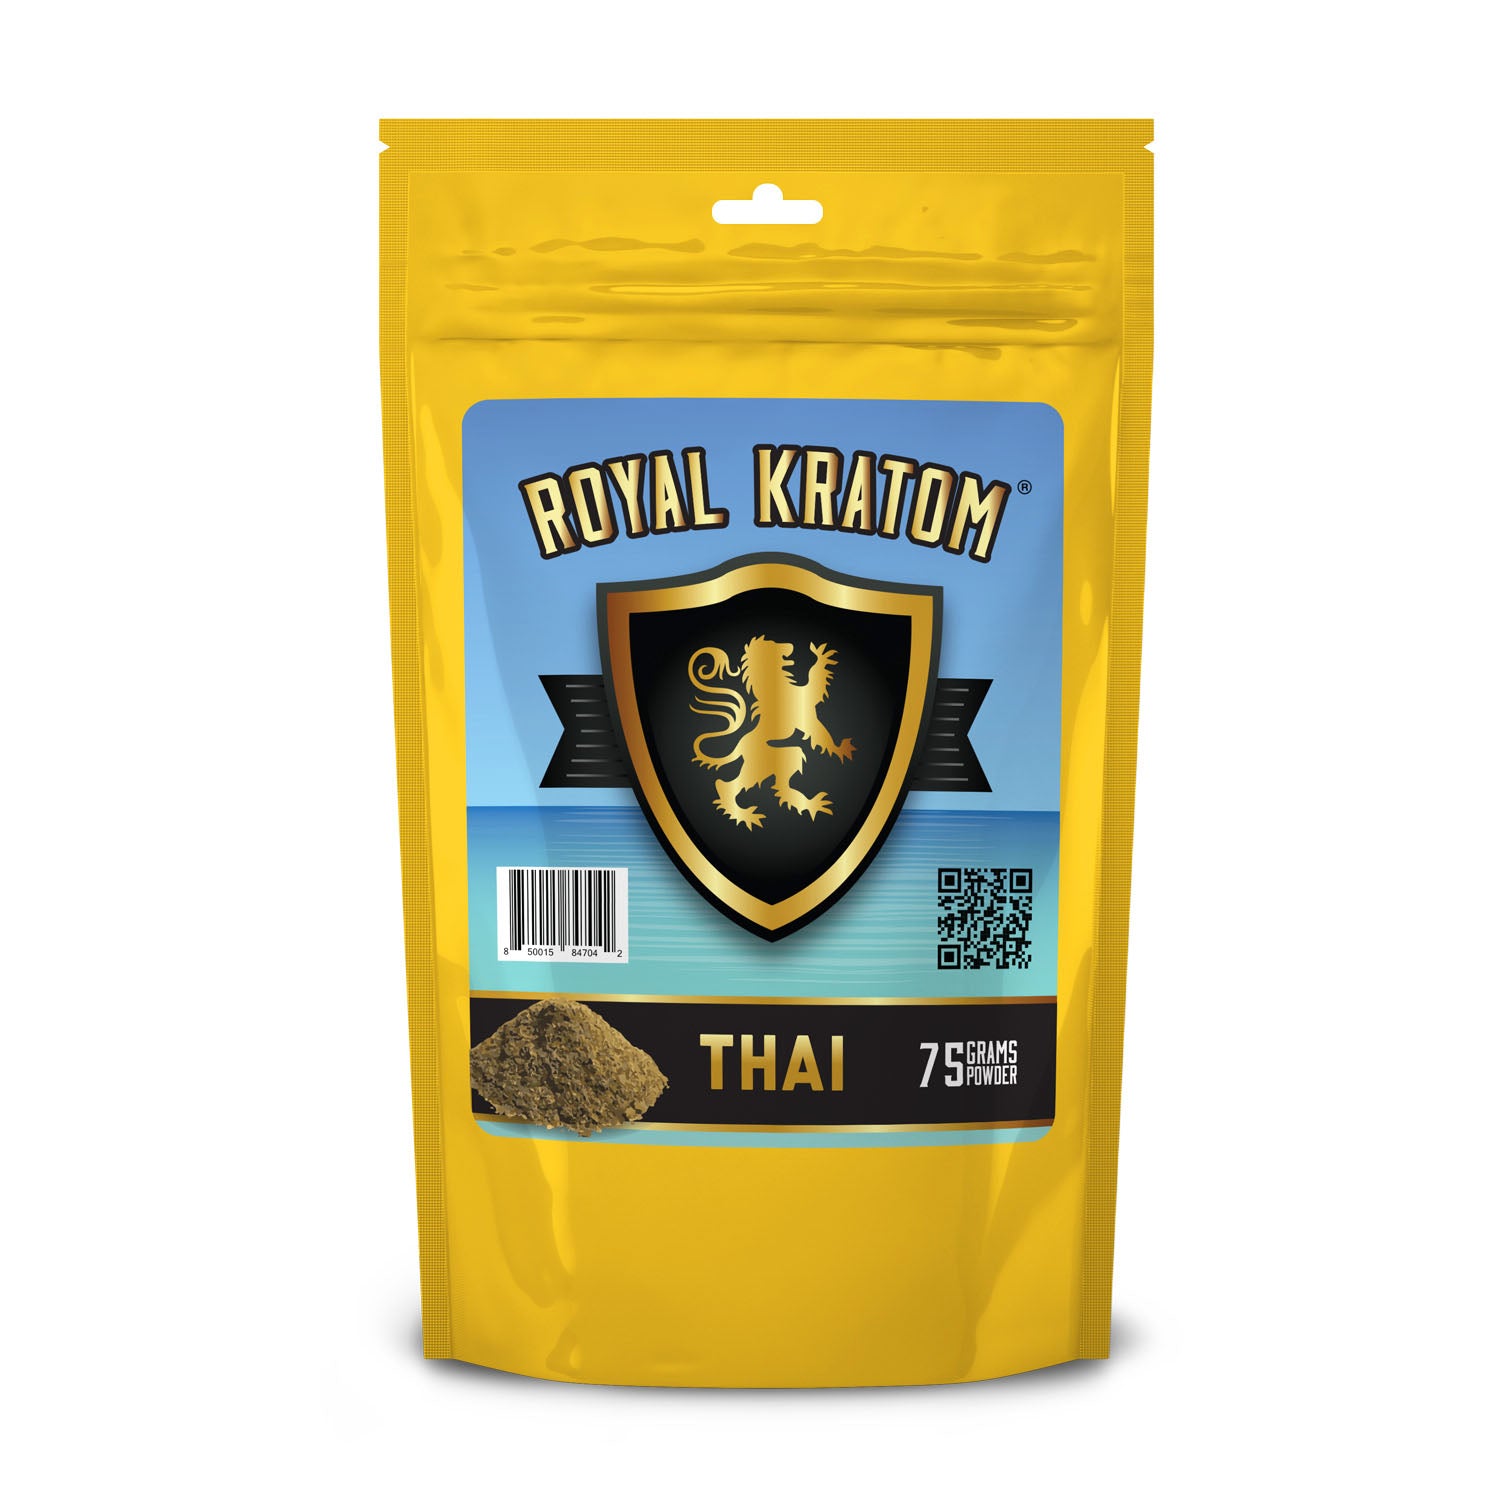 Bag of Royal Kratom Thai powder